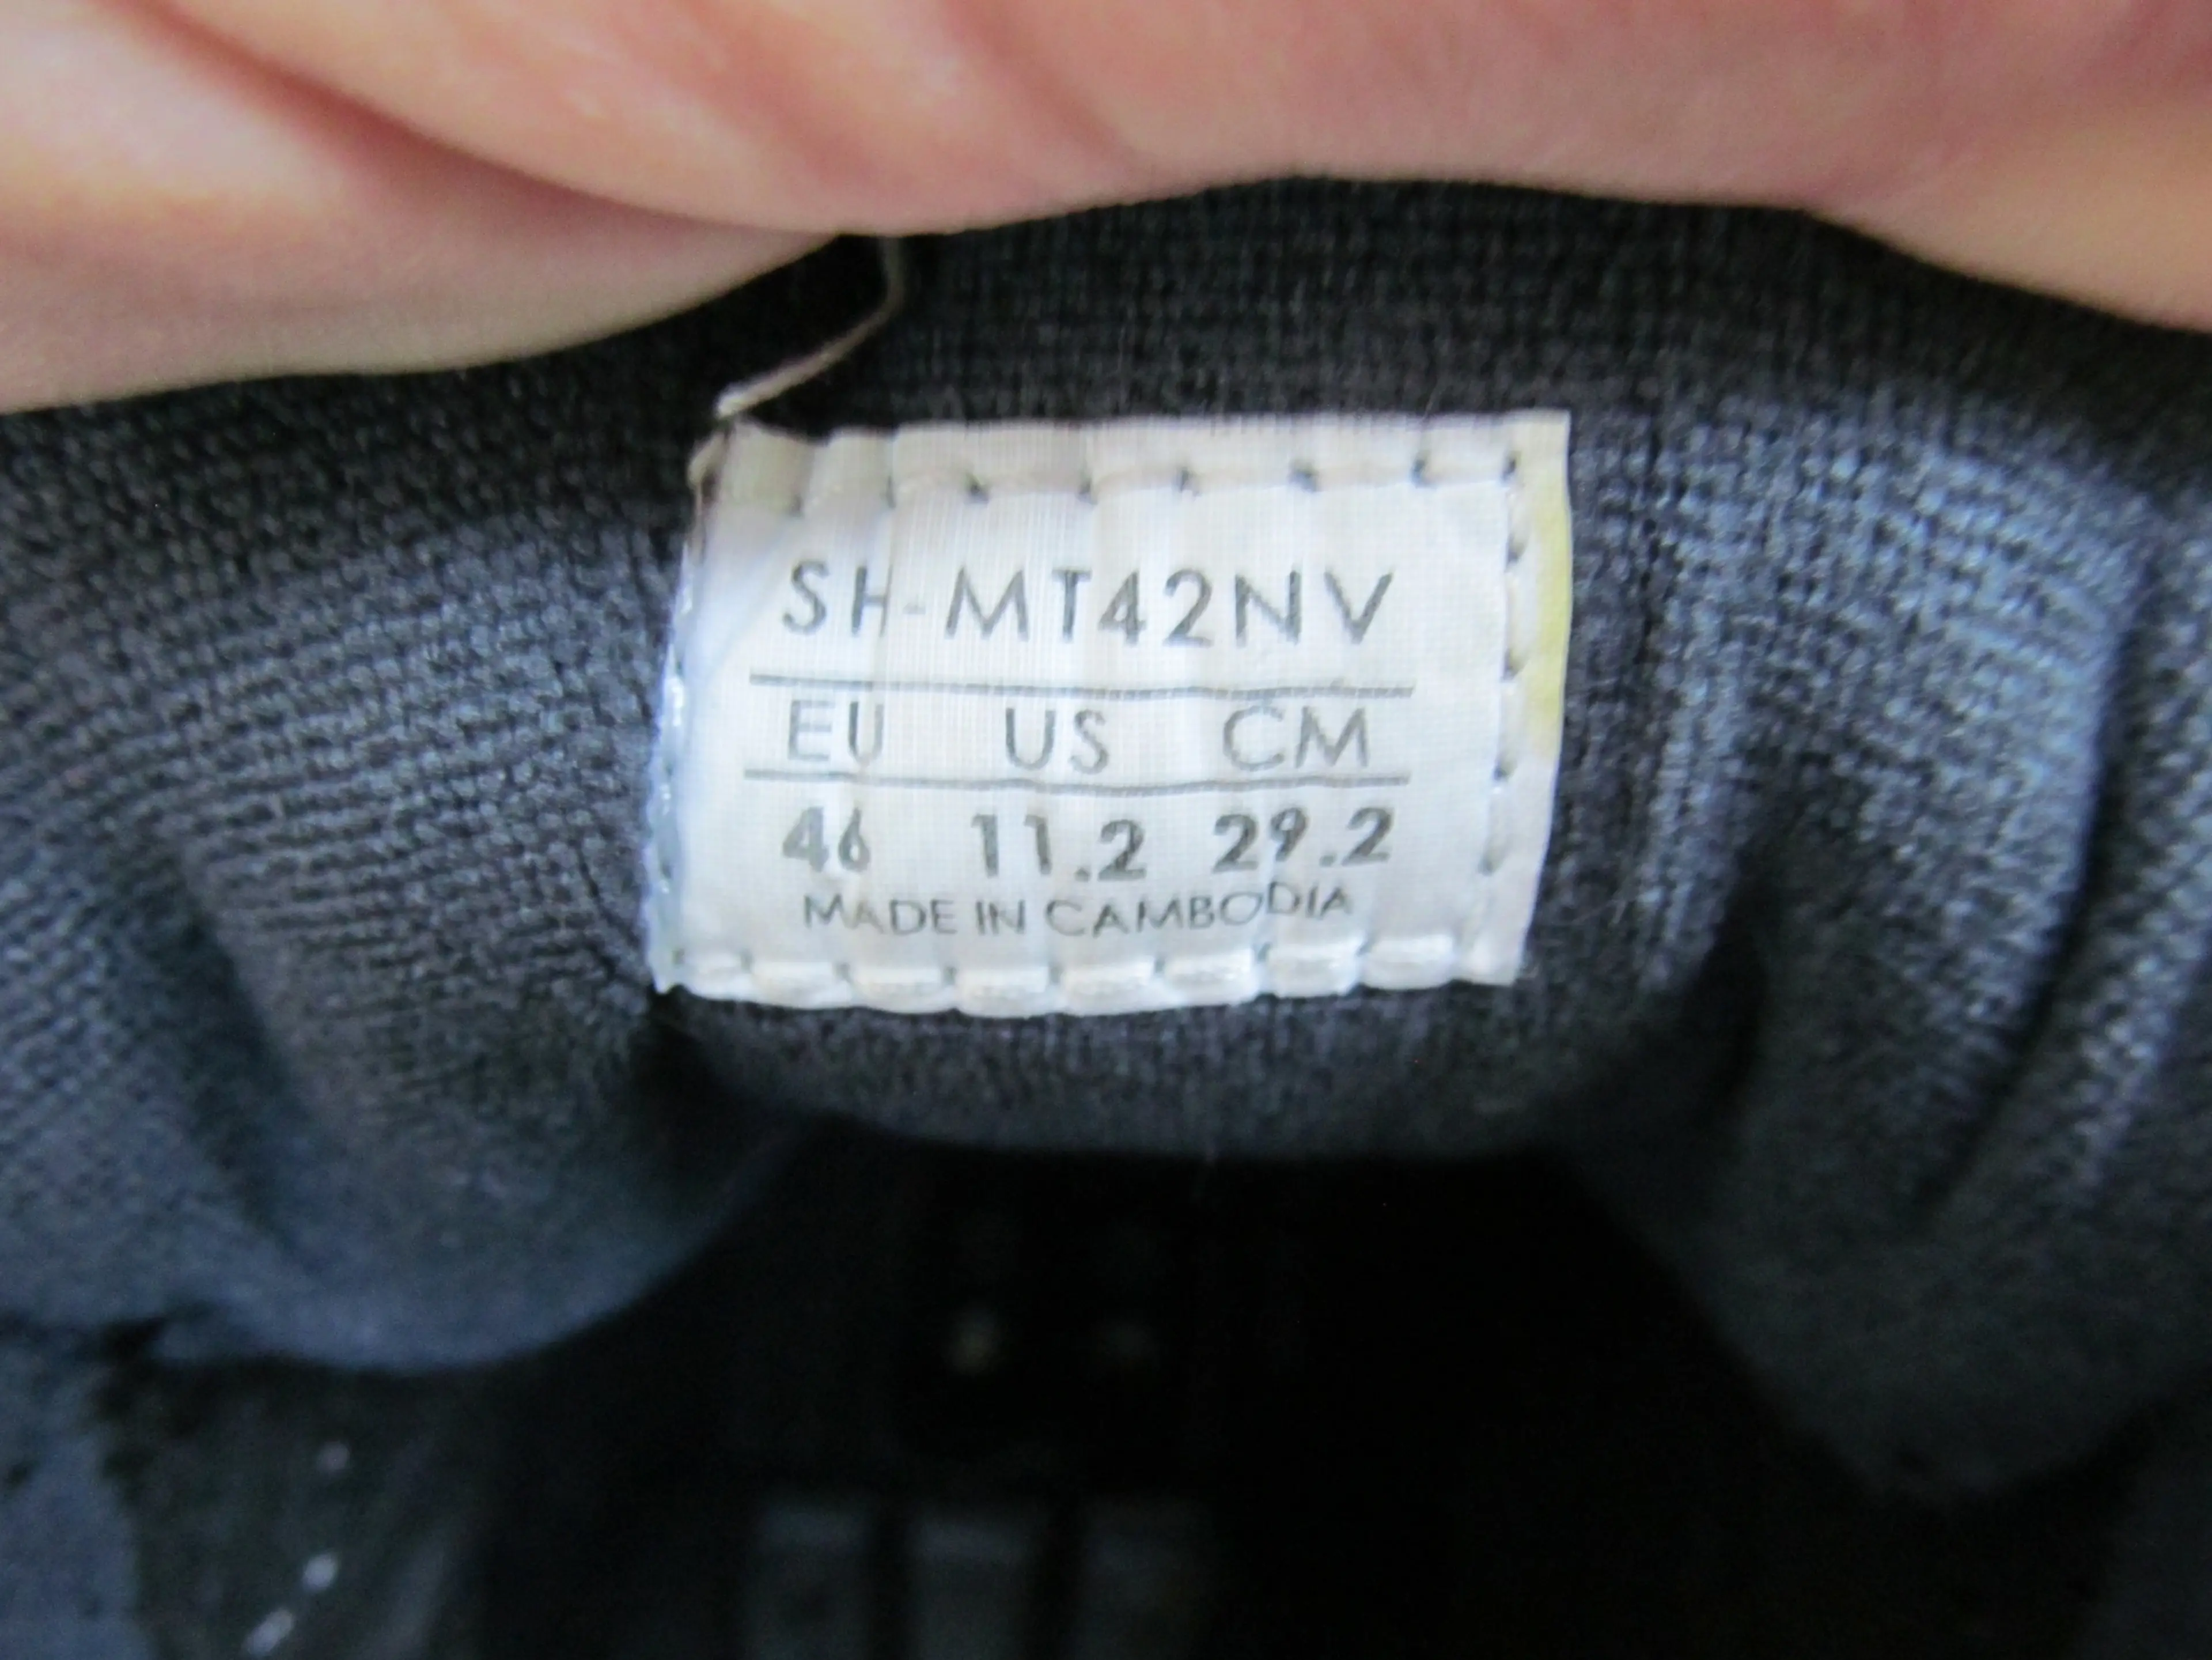 Image Pantofi Shimano SH-MV42NV nr 46, 29.2 cm